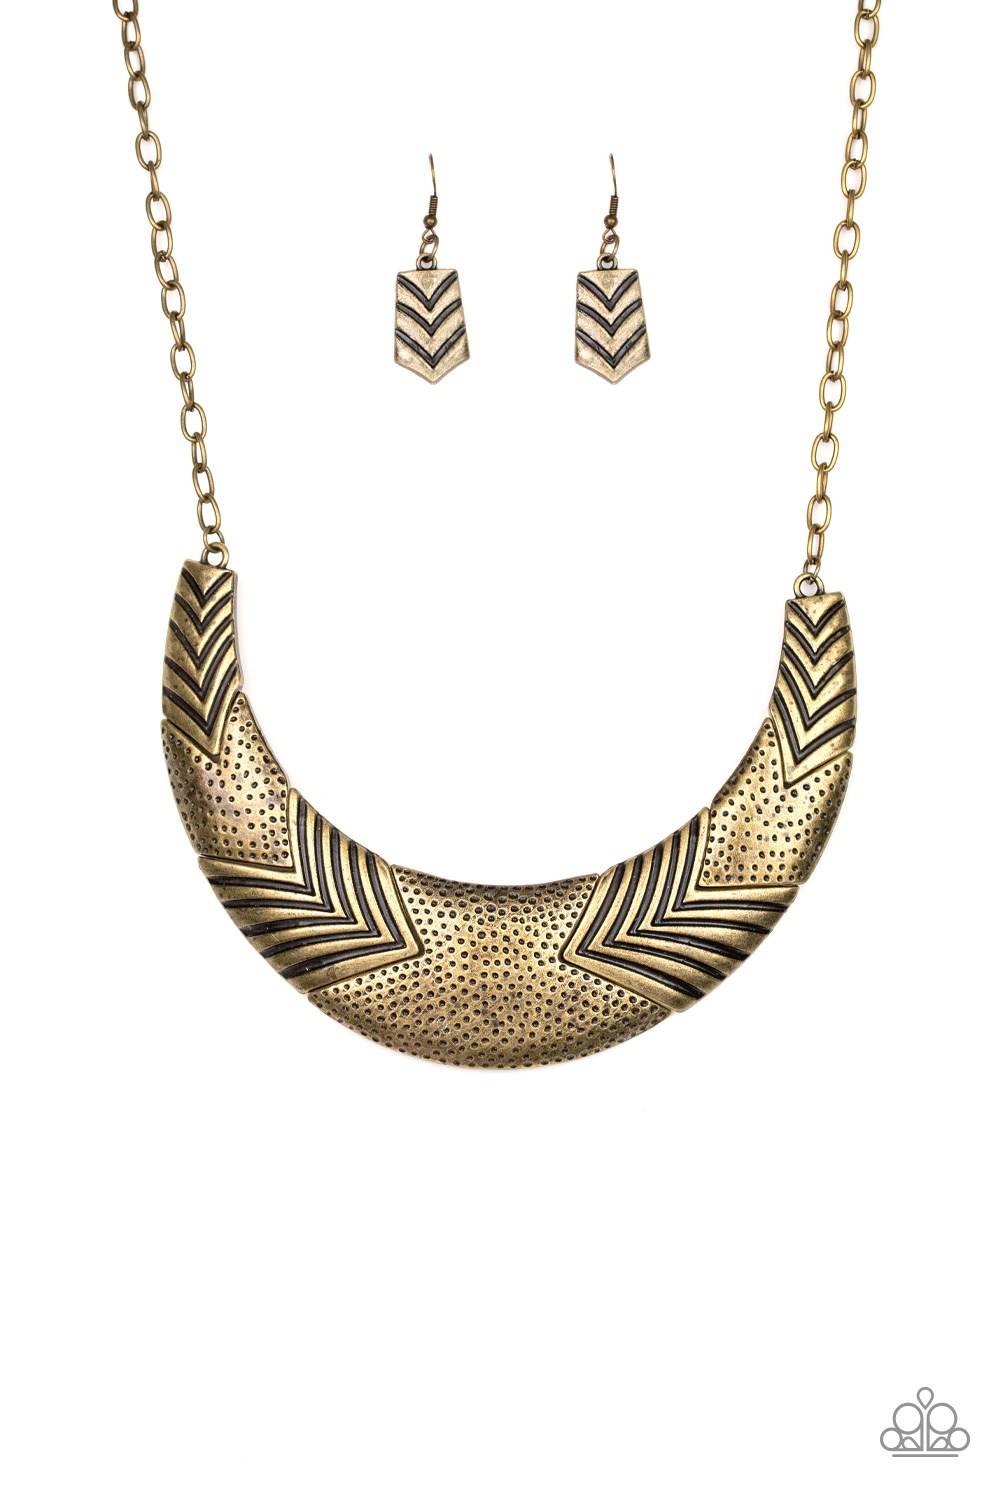 Geographic Goddess - brass necklace